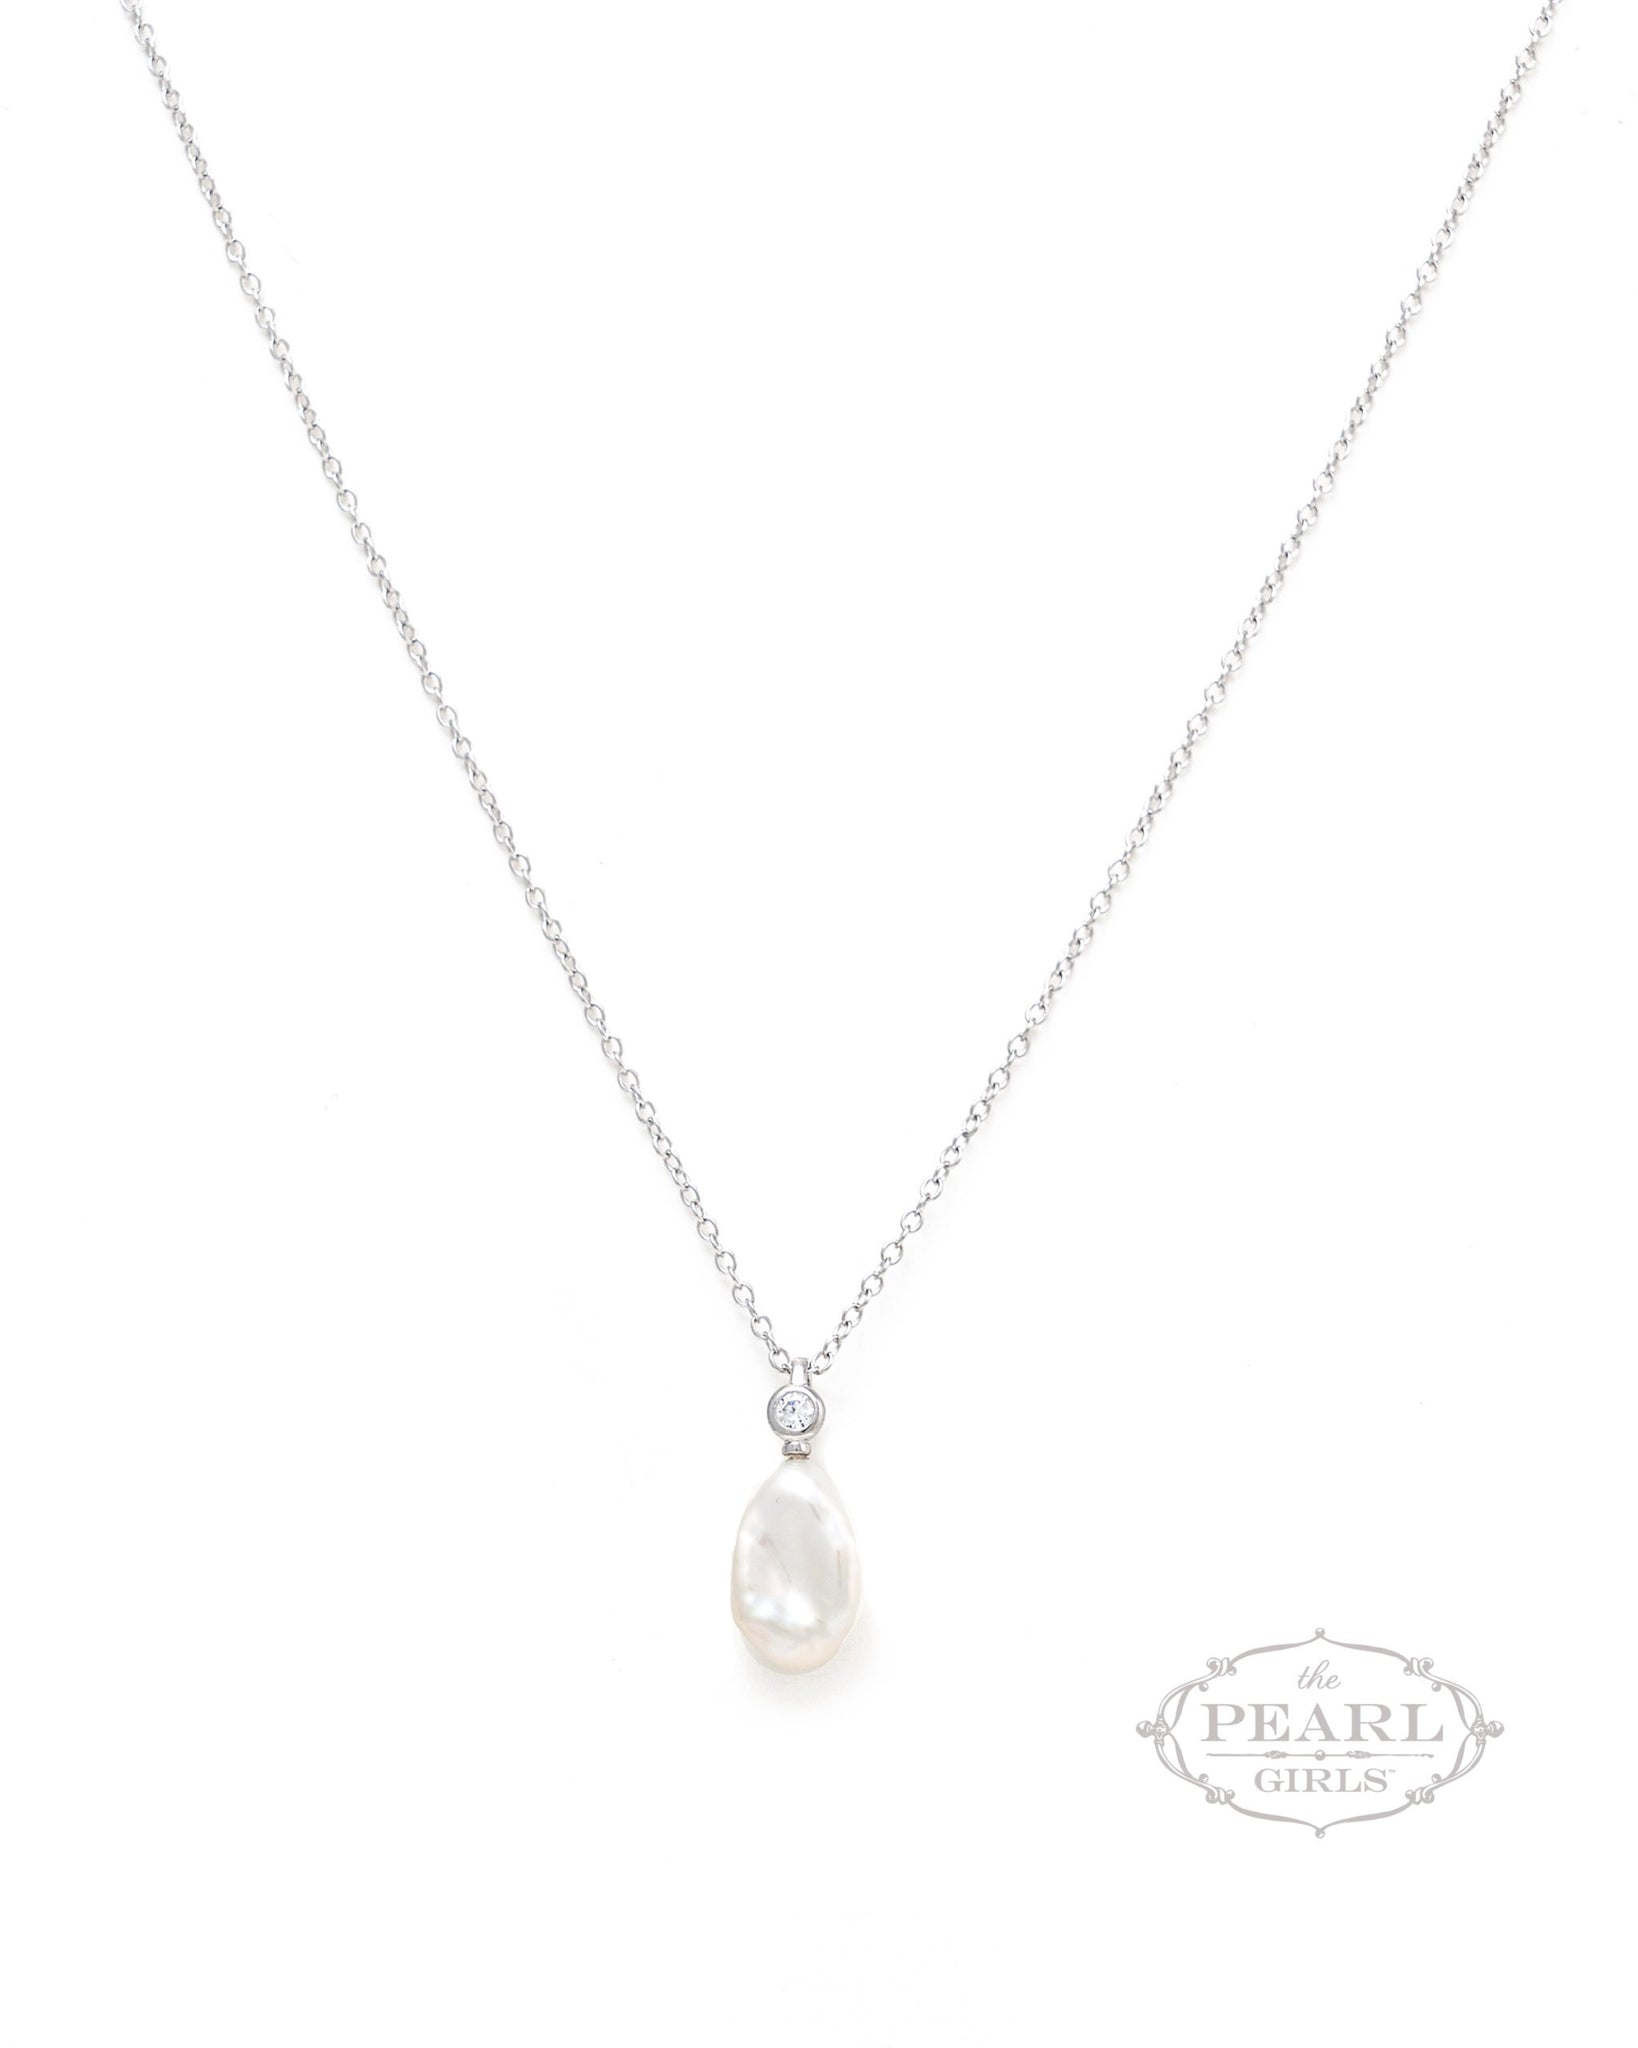 flashy splashy pearl necklace - the pearl girls